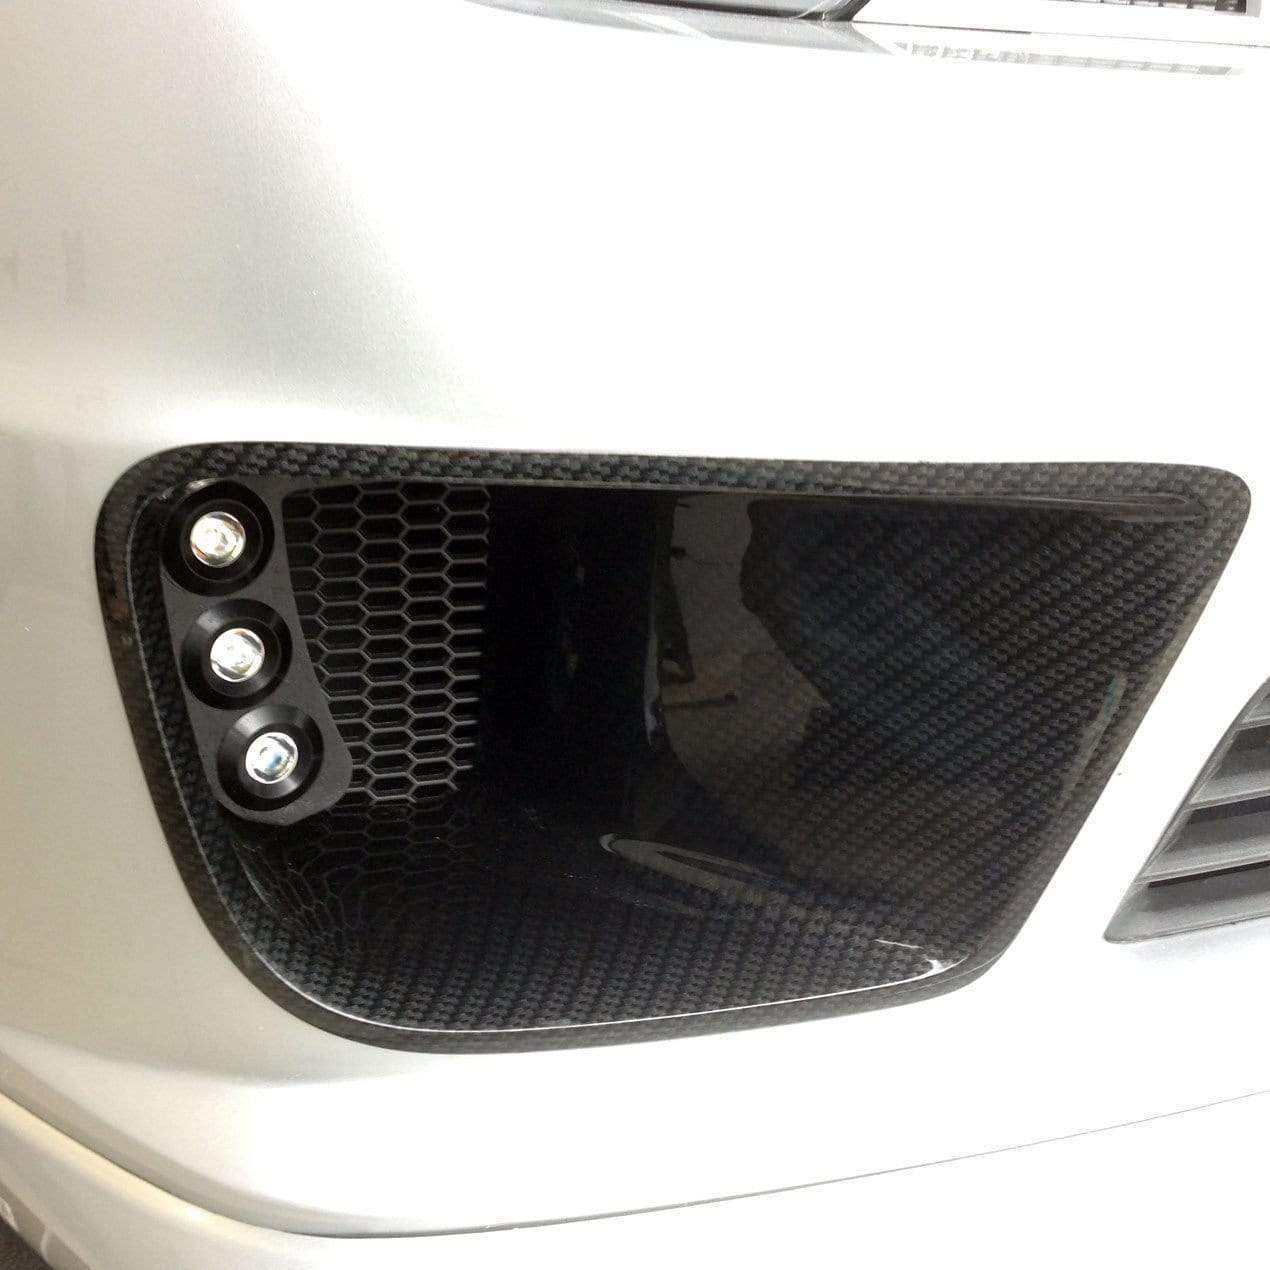 ACS Eagle-T3 Triple LED Lighting Kit for Camaro 2010-2013, 3 lights/port, SKU 33-4-081.